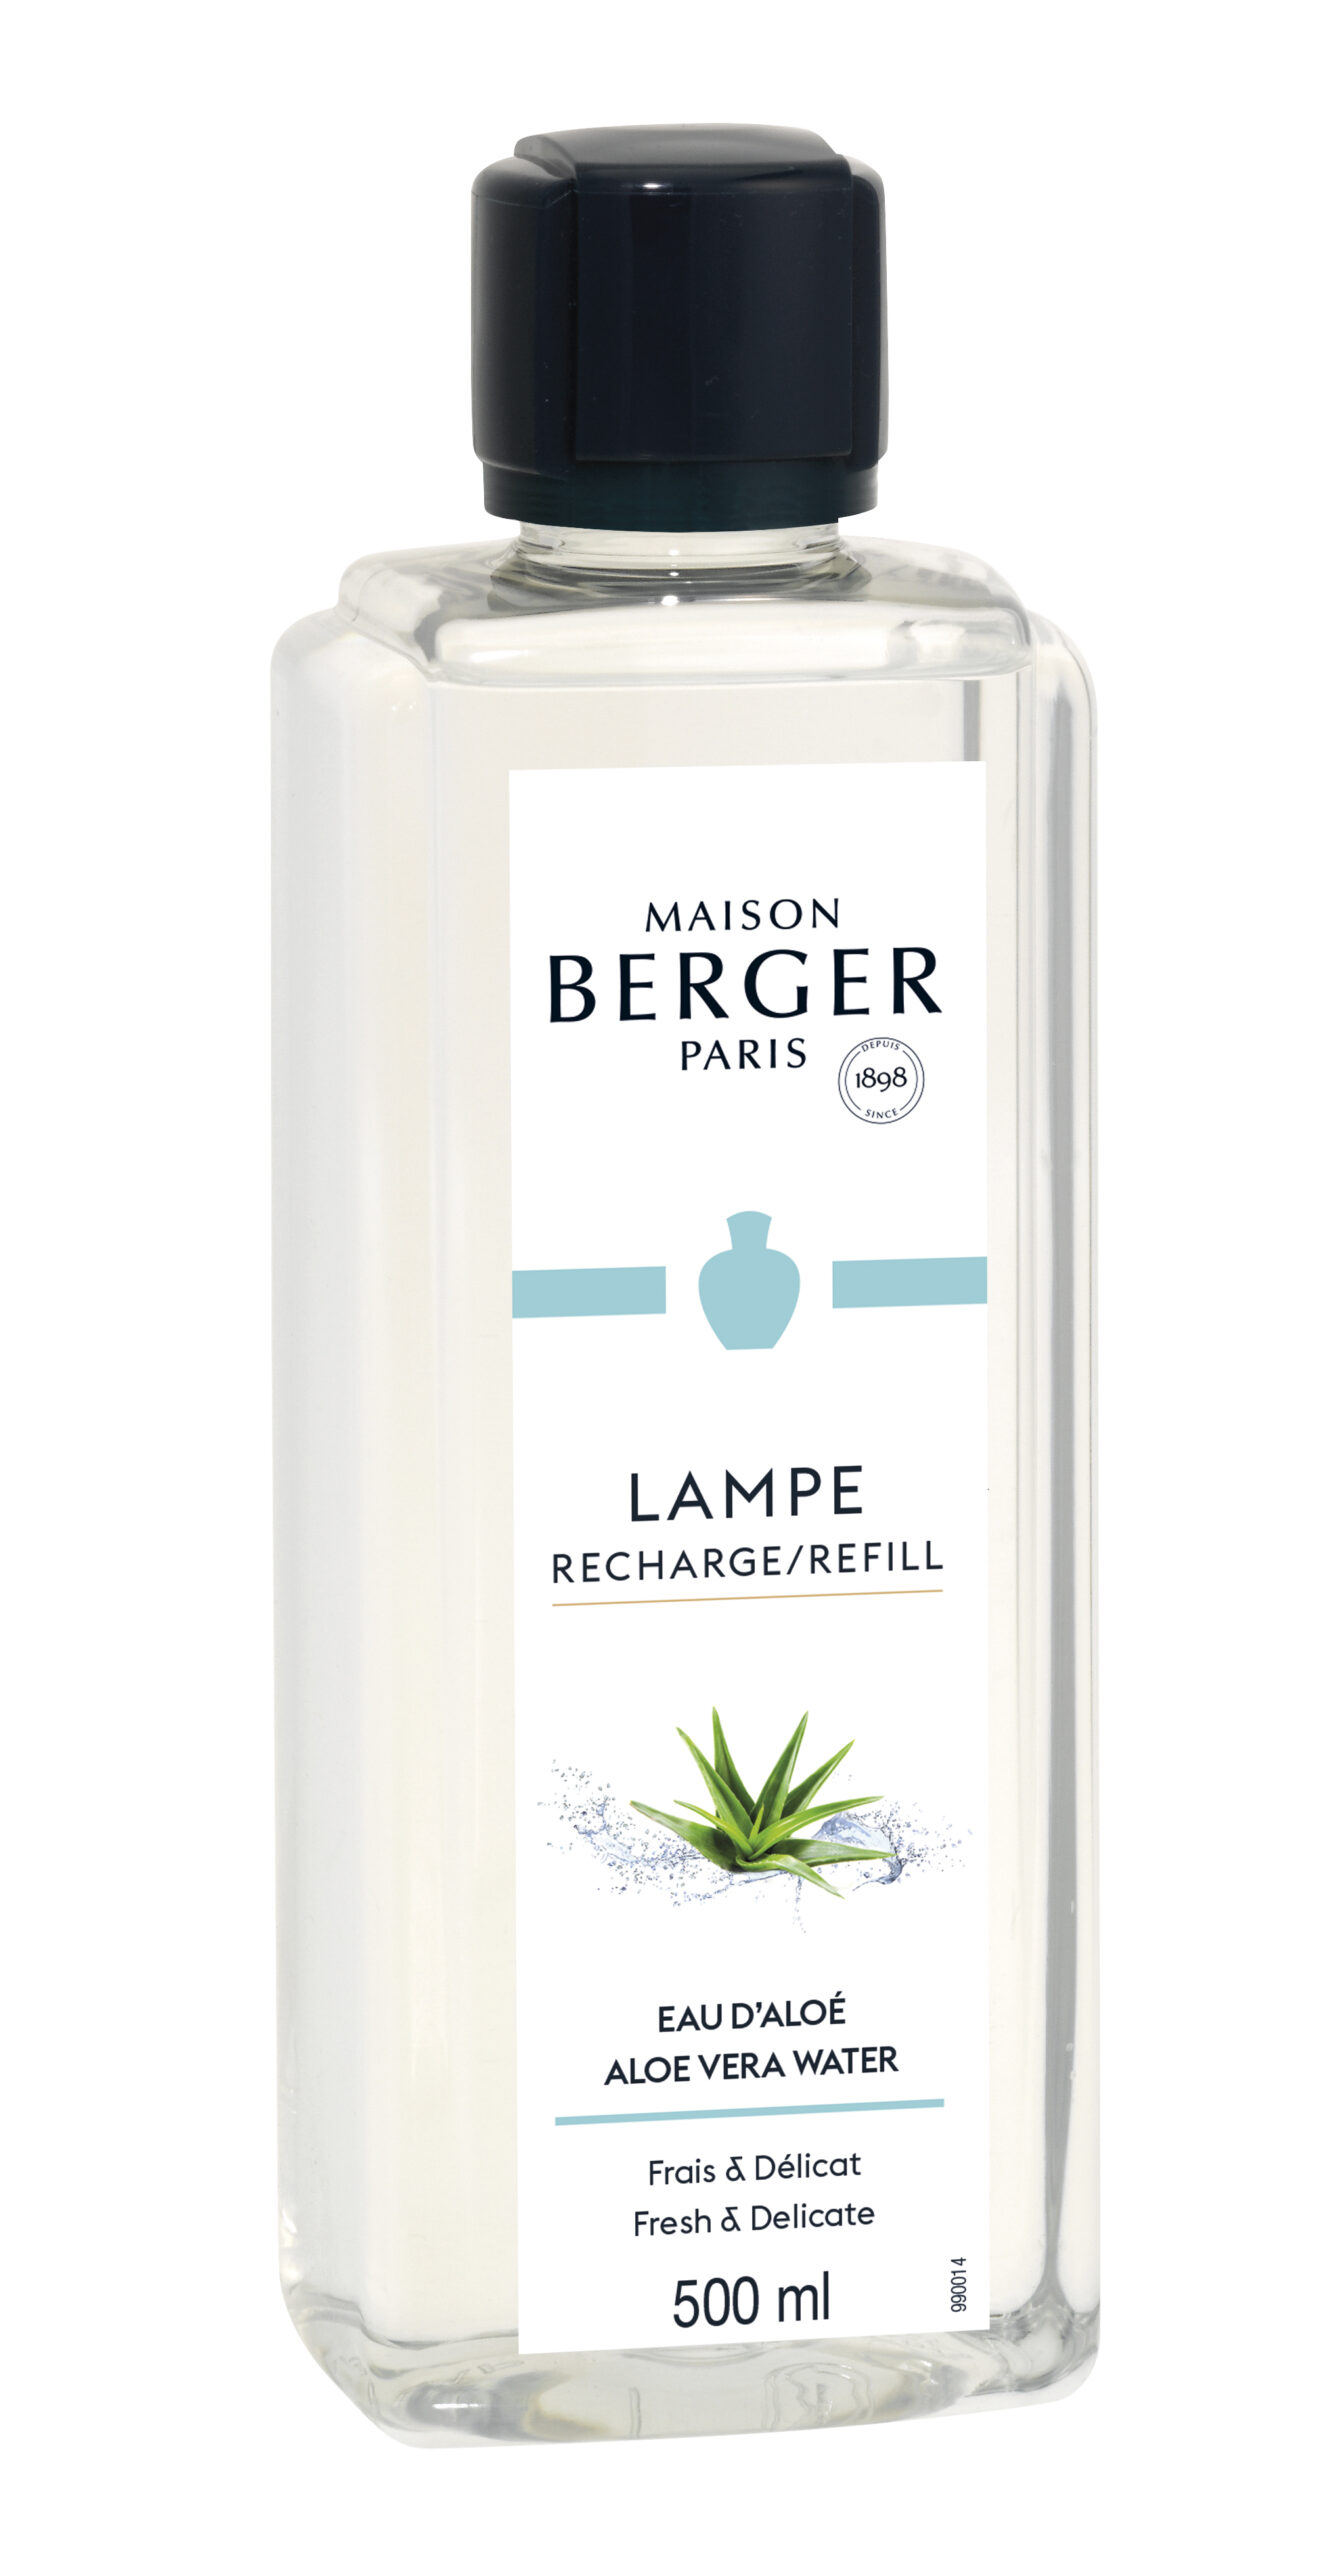 Maison Berger Paris - parfum Aloë Vera Water - 500 ml